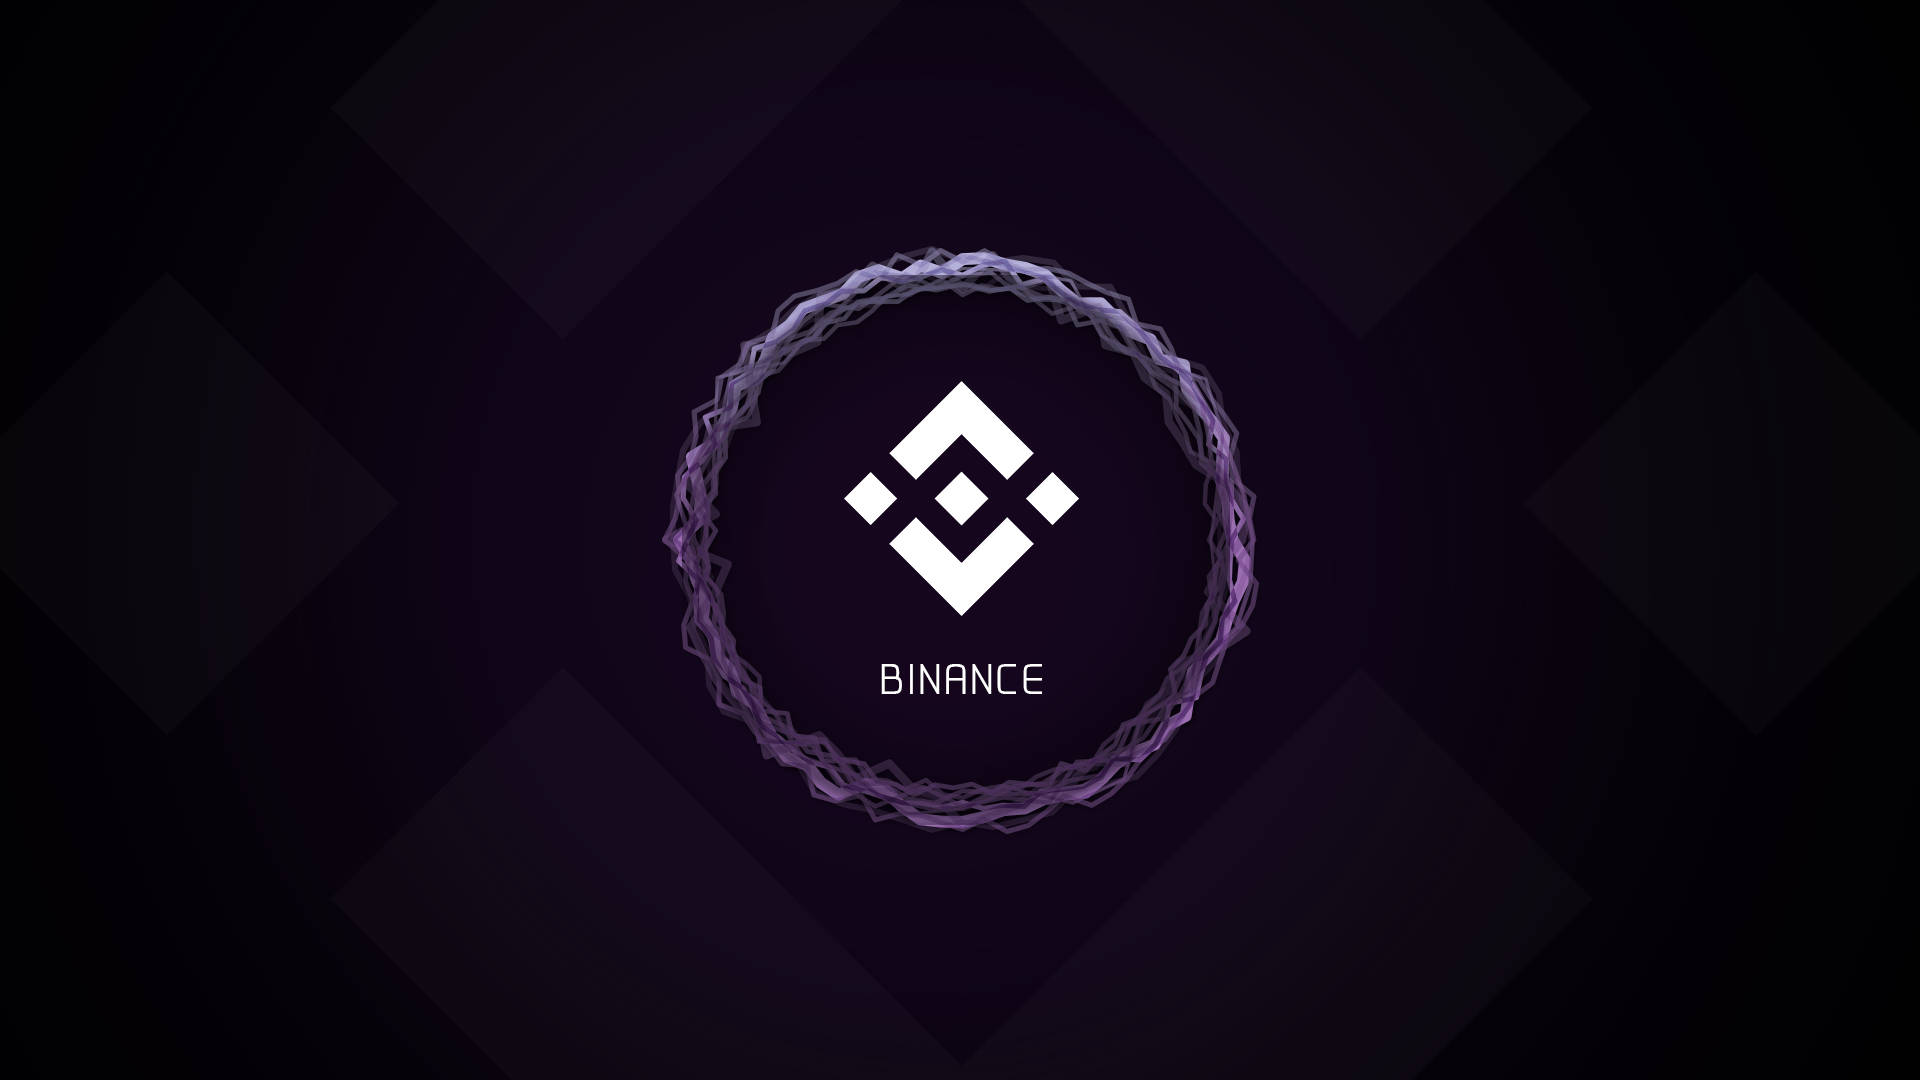 Binance In A Circle Wallpaper